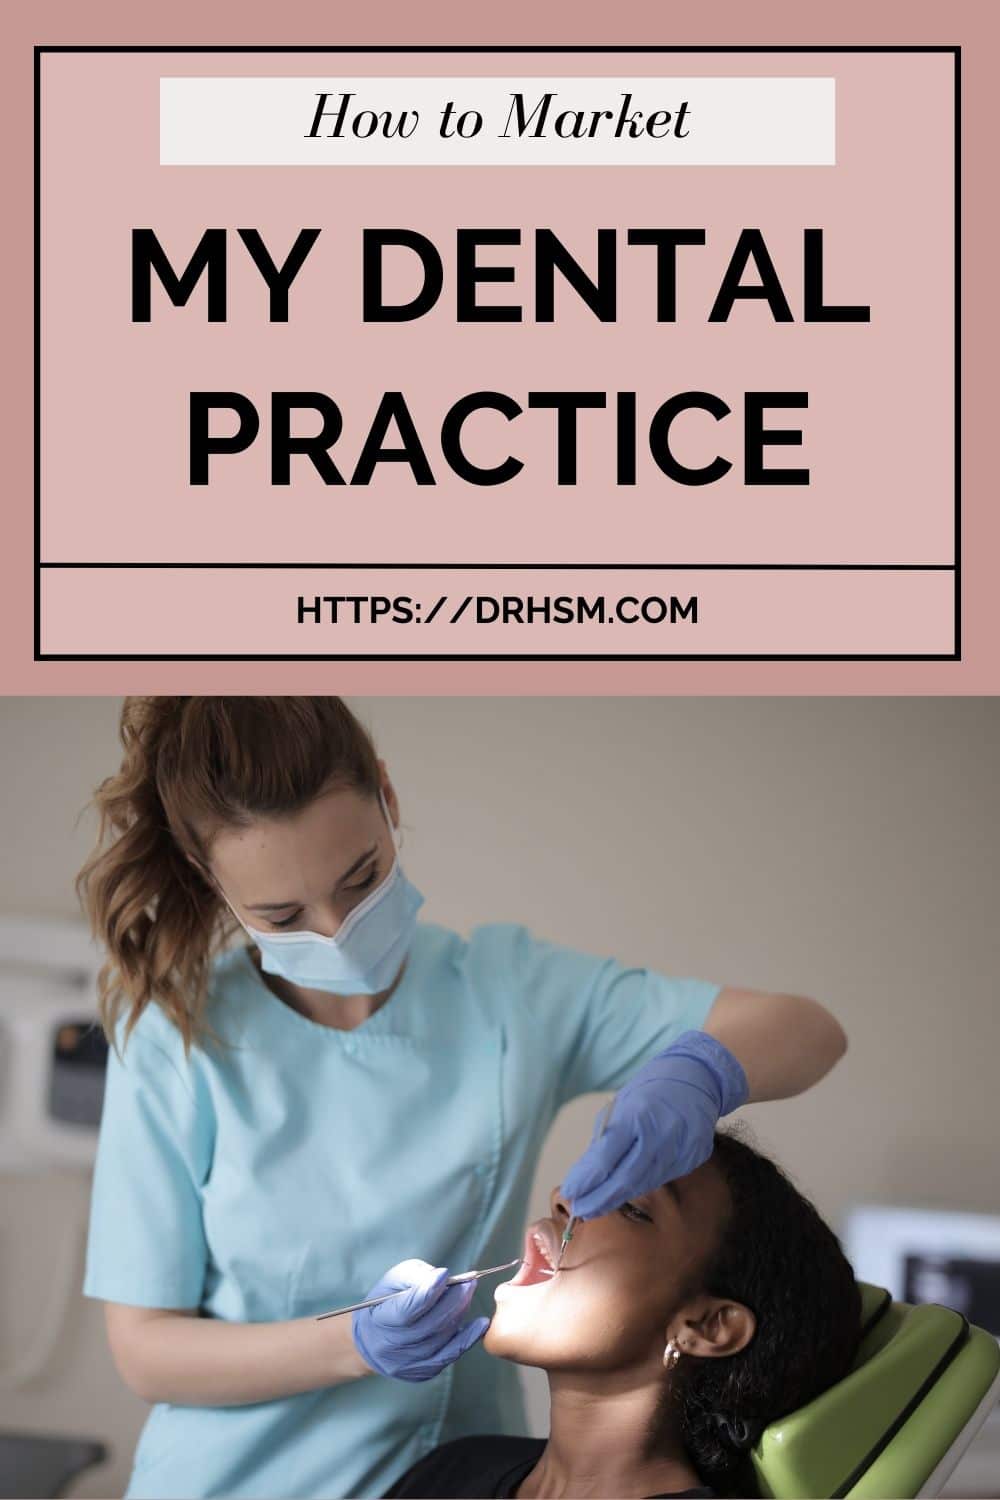 How to market my dental practice